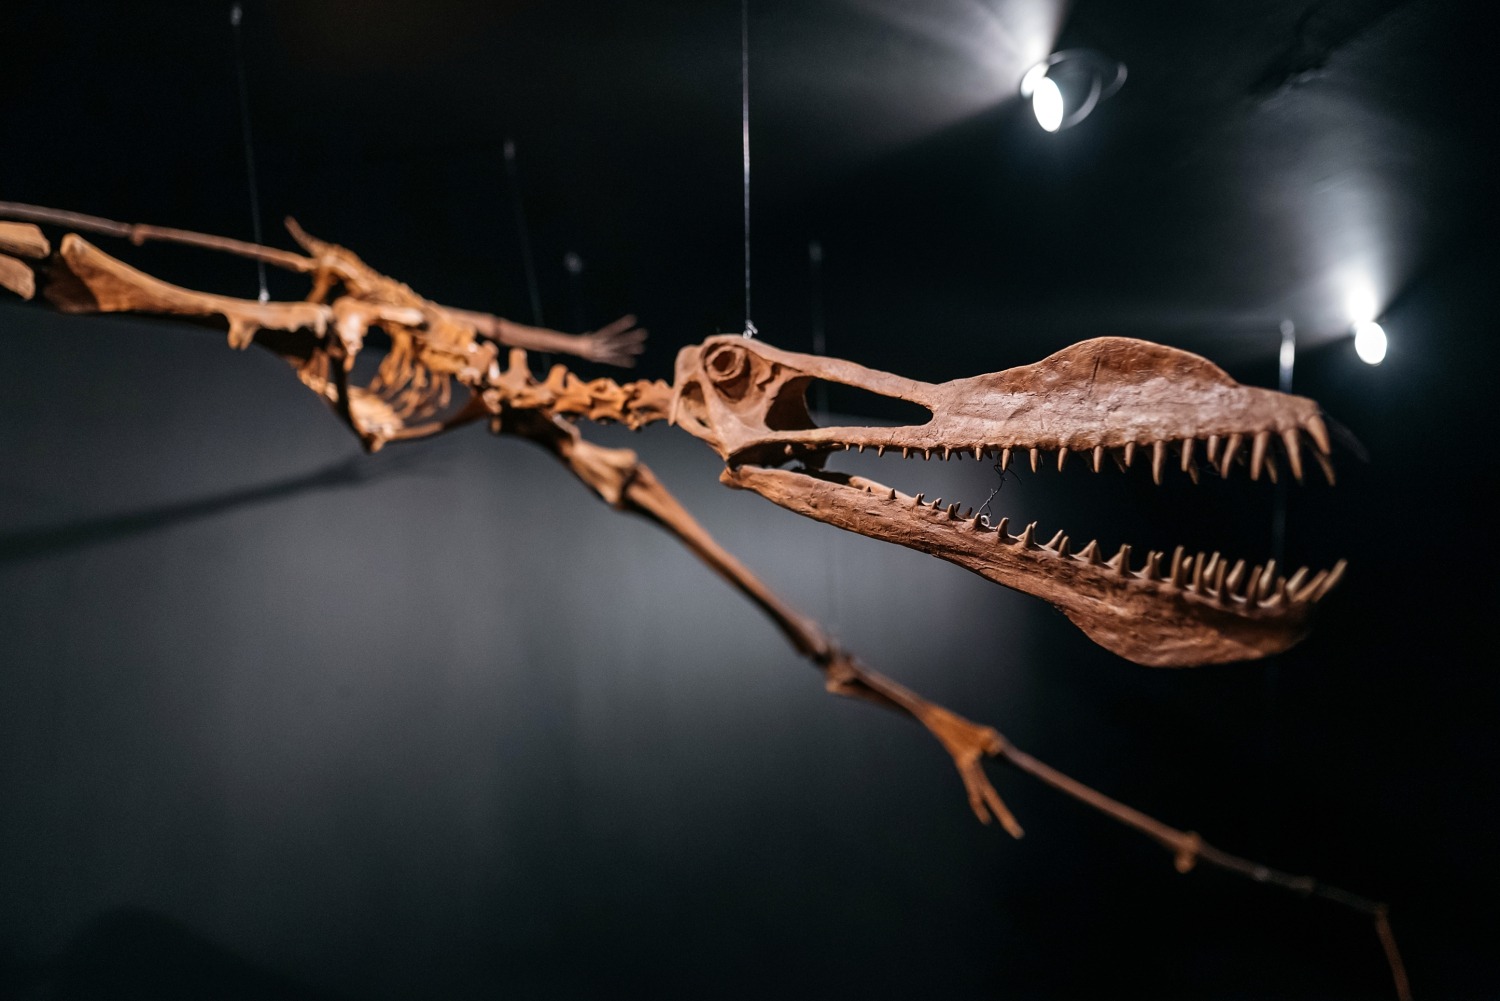 Gondwana das praehistorium musé préhistorique Sarre Saar Allemagne histoire naturelle dinosaure 